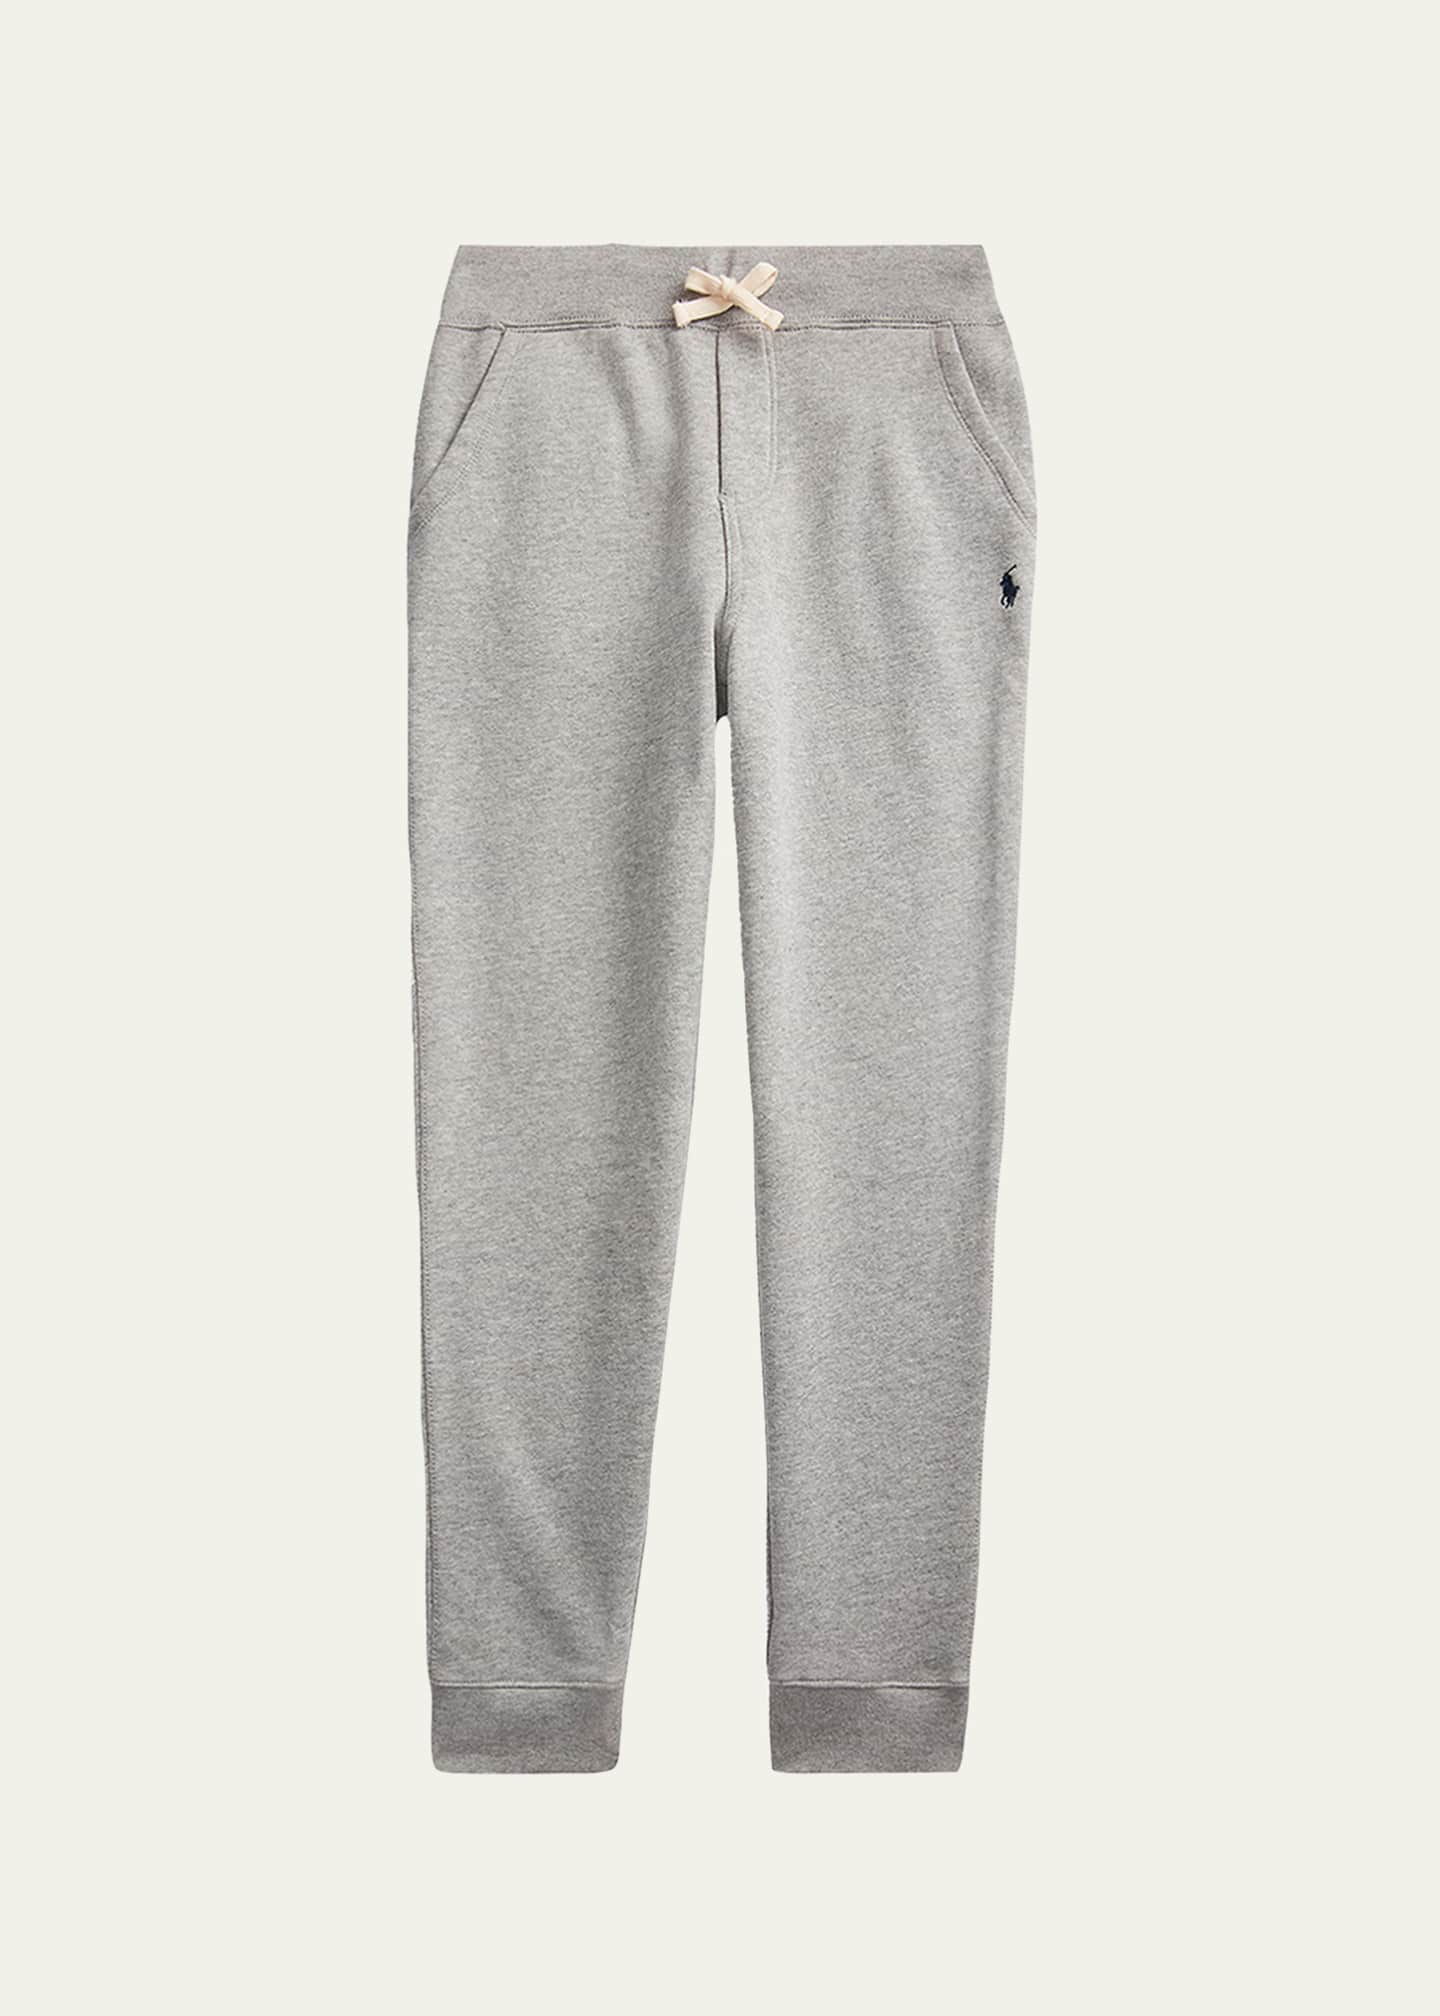 Ralph Lauren Childrenswear Boy's Fleece Jogger Pants, Size S-XL